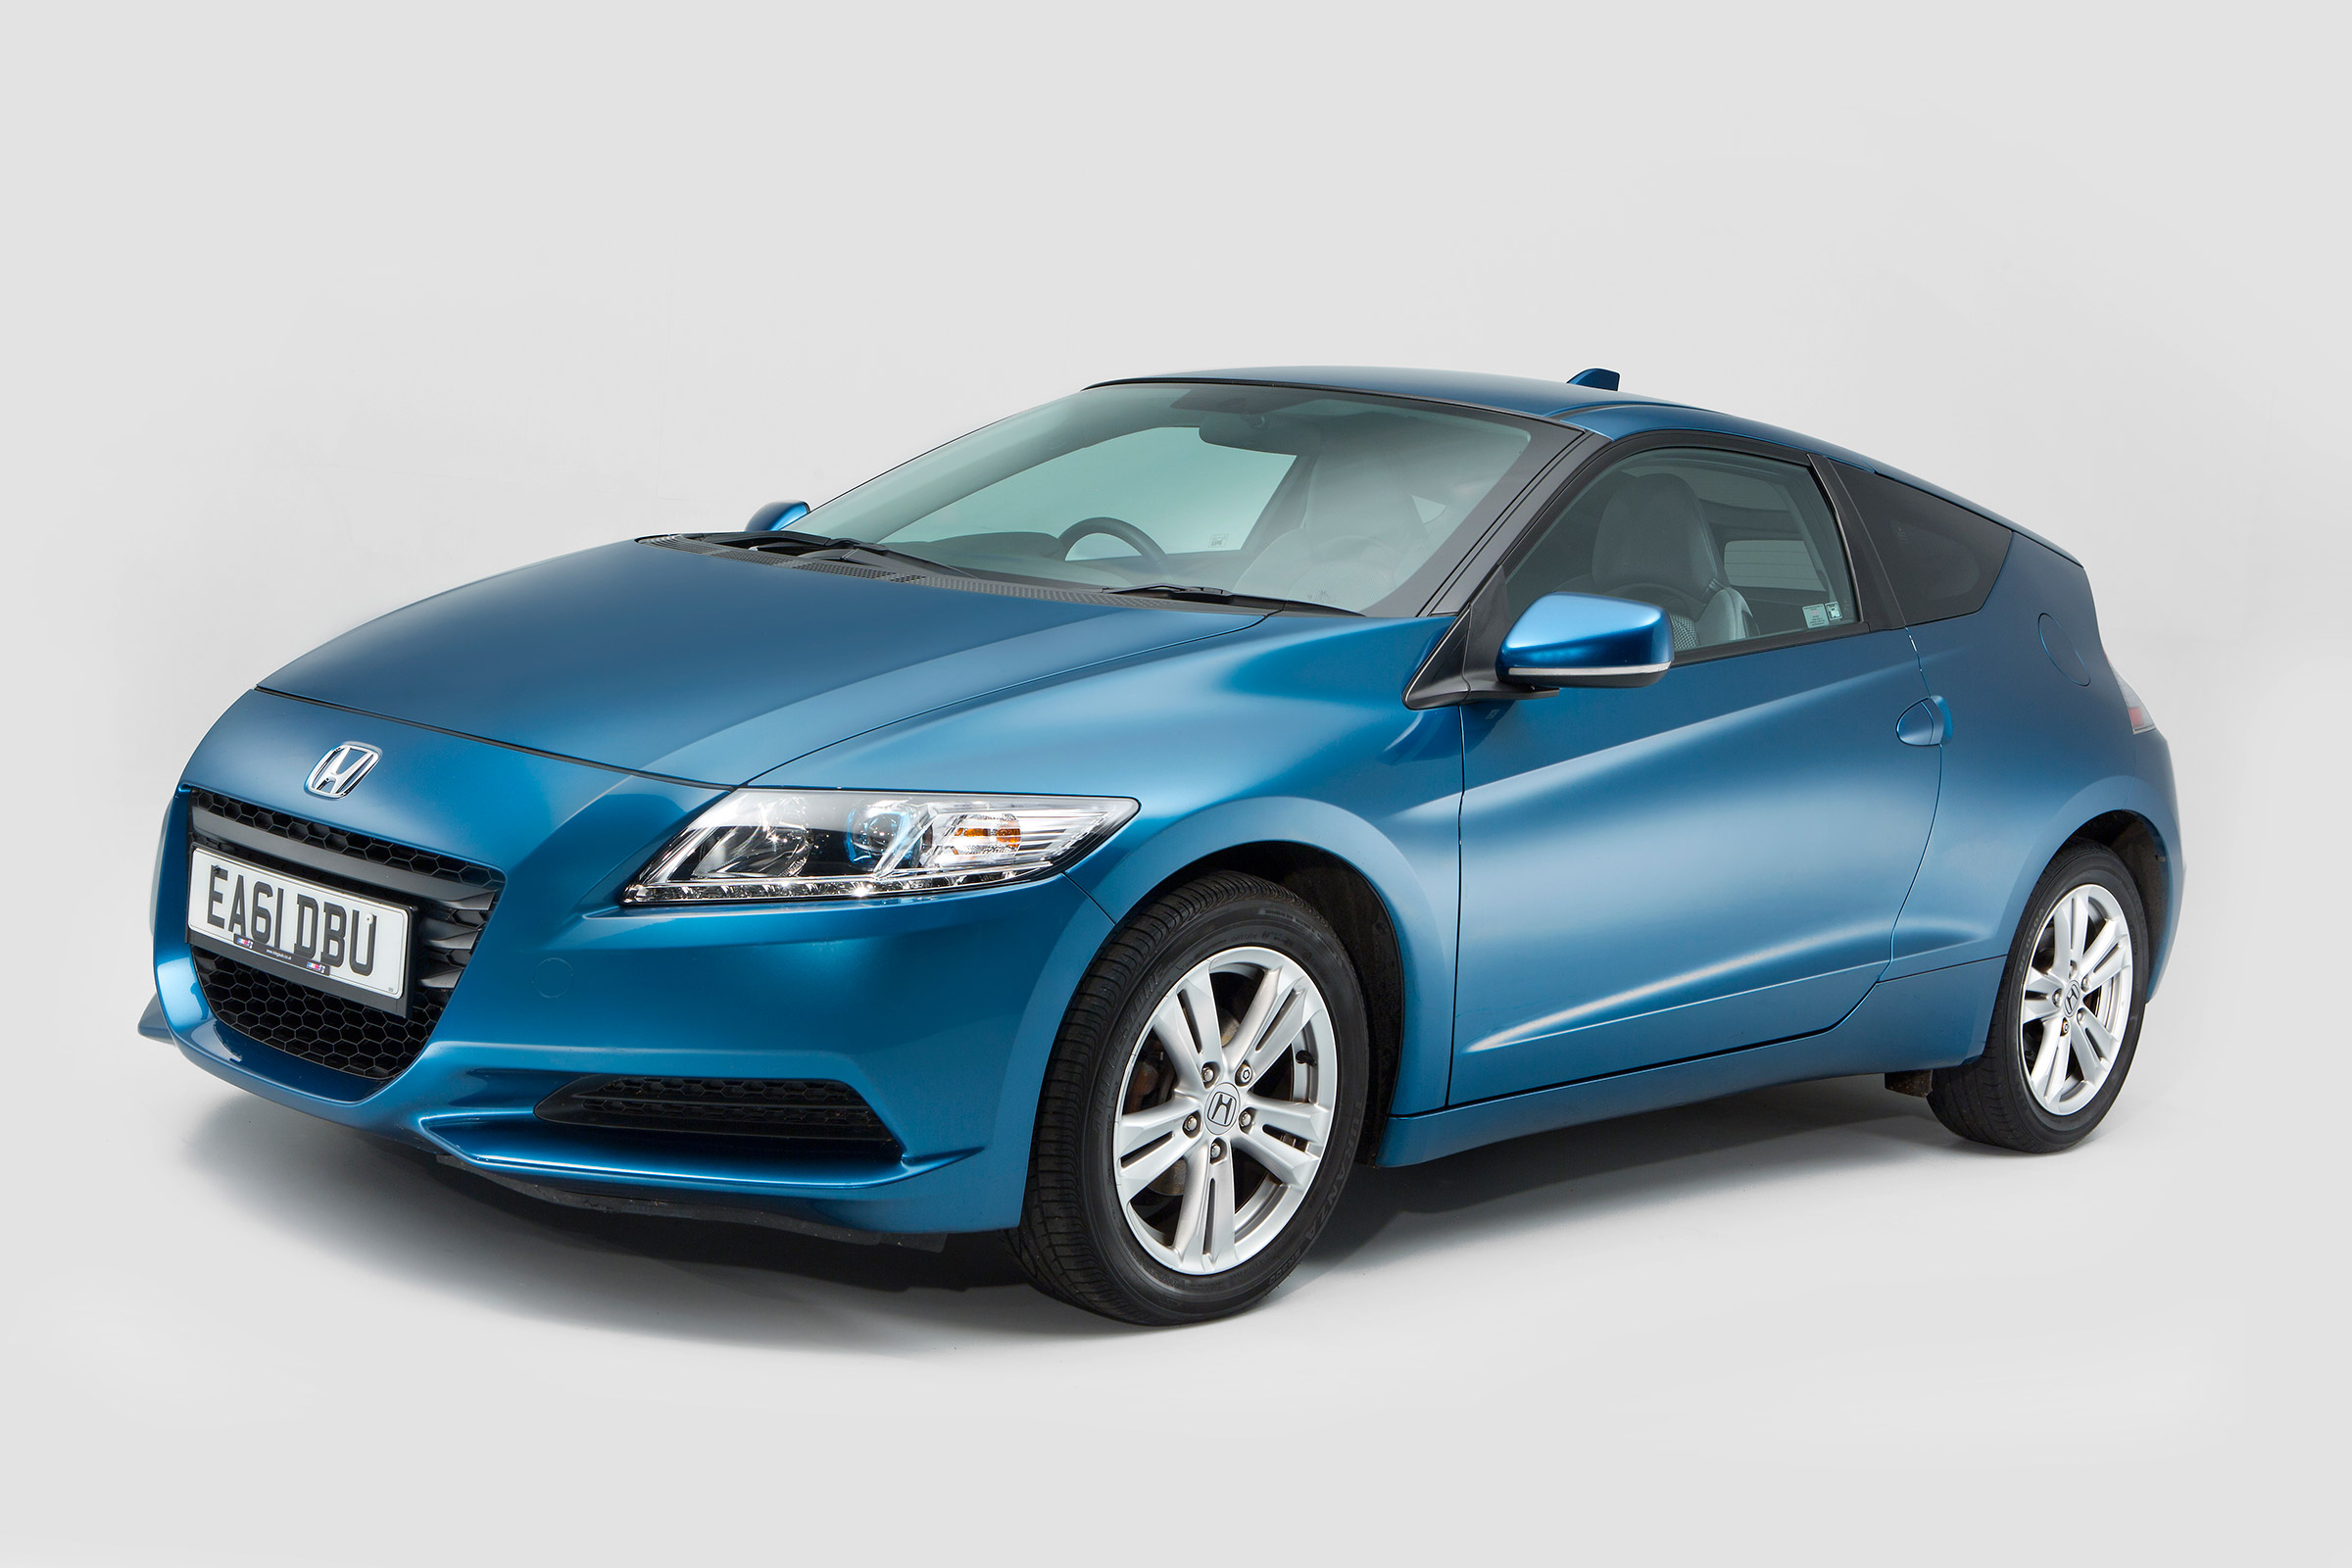 Honda CR-Z (2013 - 2014) used car review, Car review